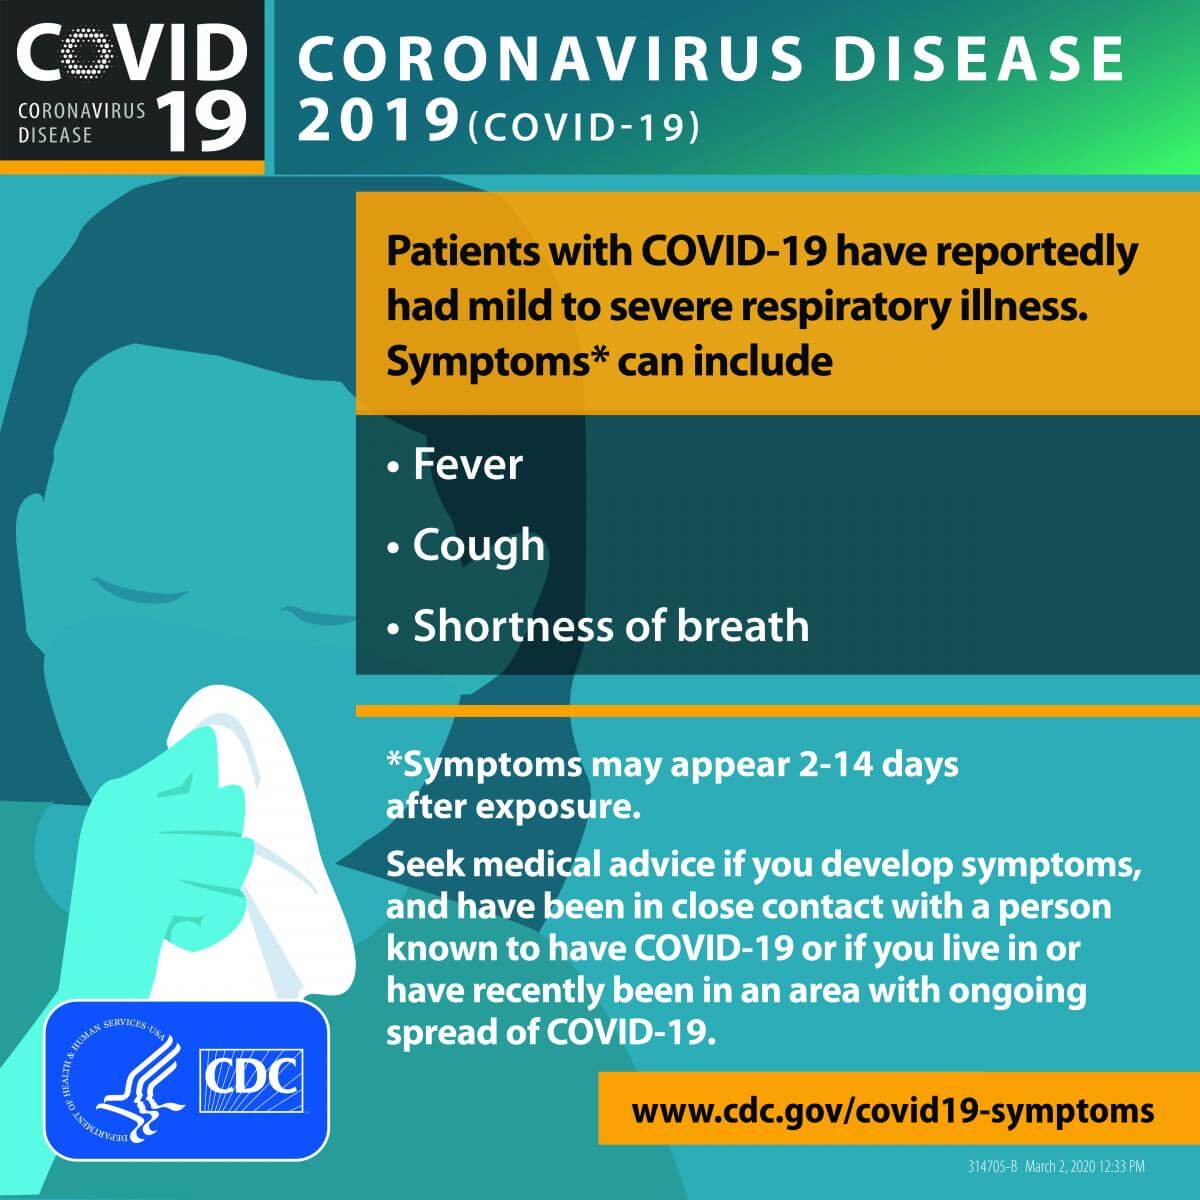 Coronavirus Disease 2019 (COVID-19) – Resources for General Information, Preparedness and Prevention